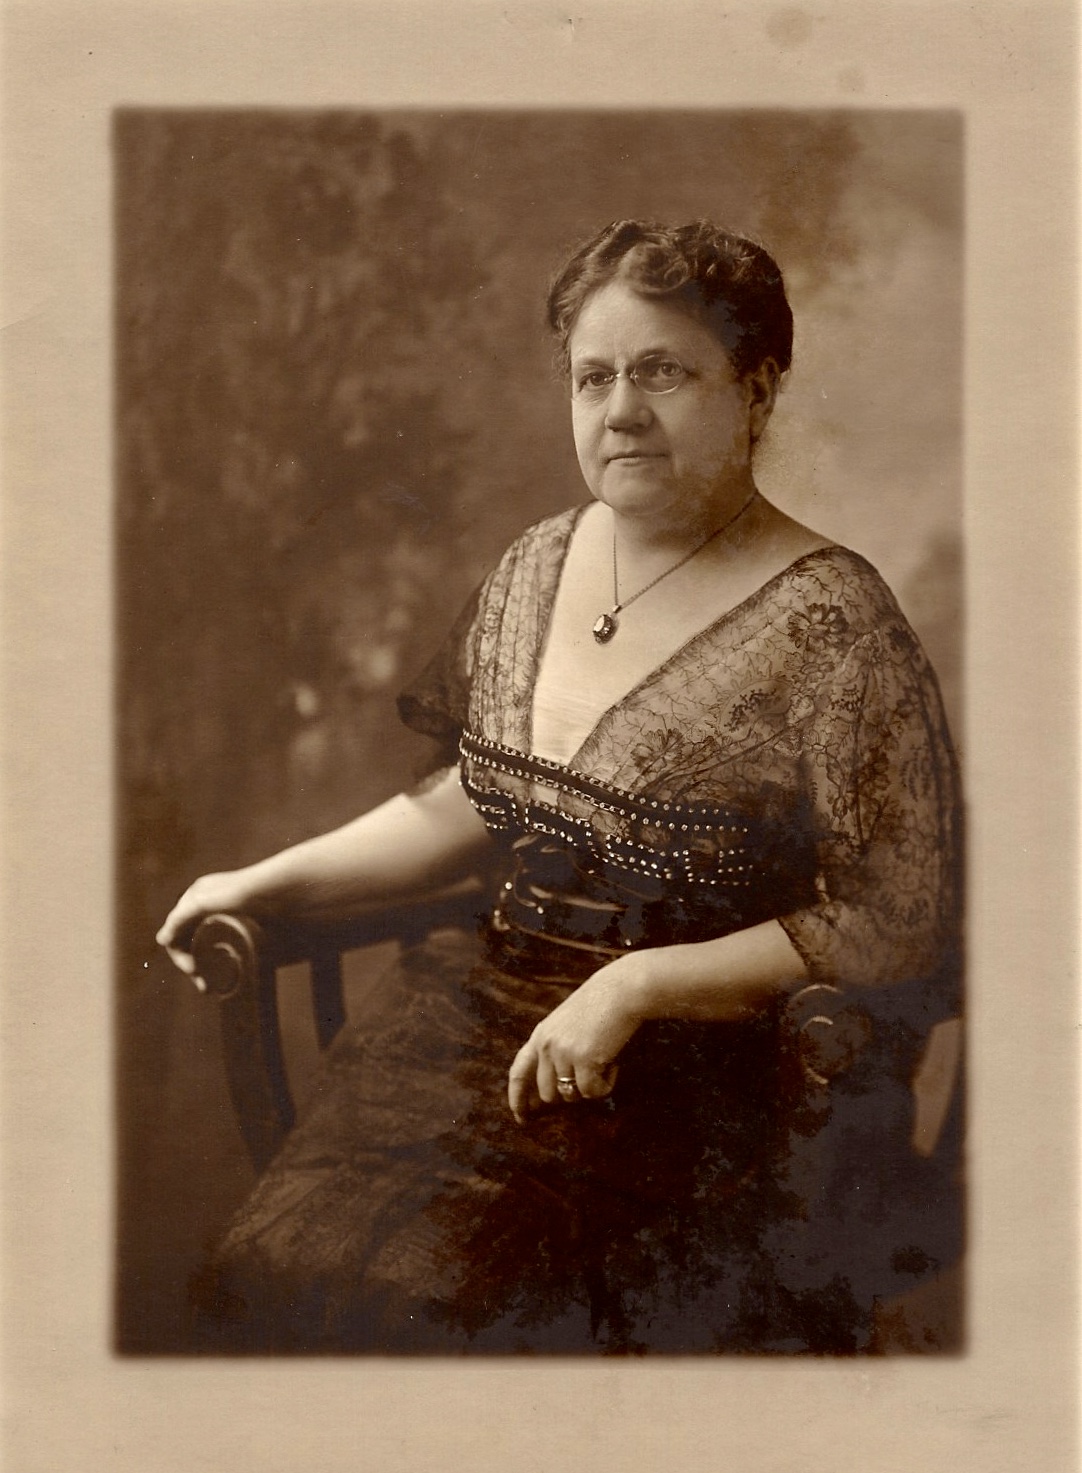 Mrs. George Thacher Guernsey of Independence, Kansas